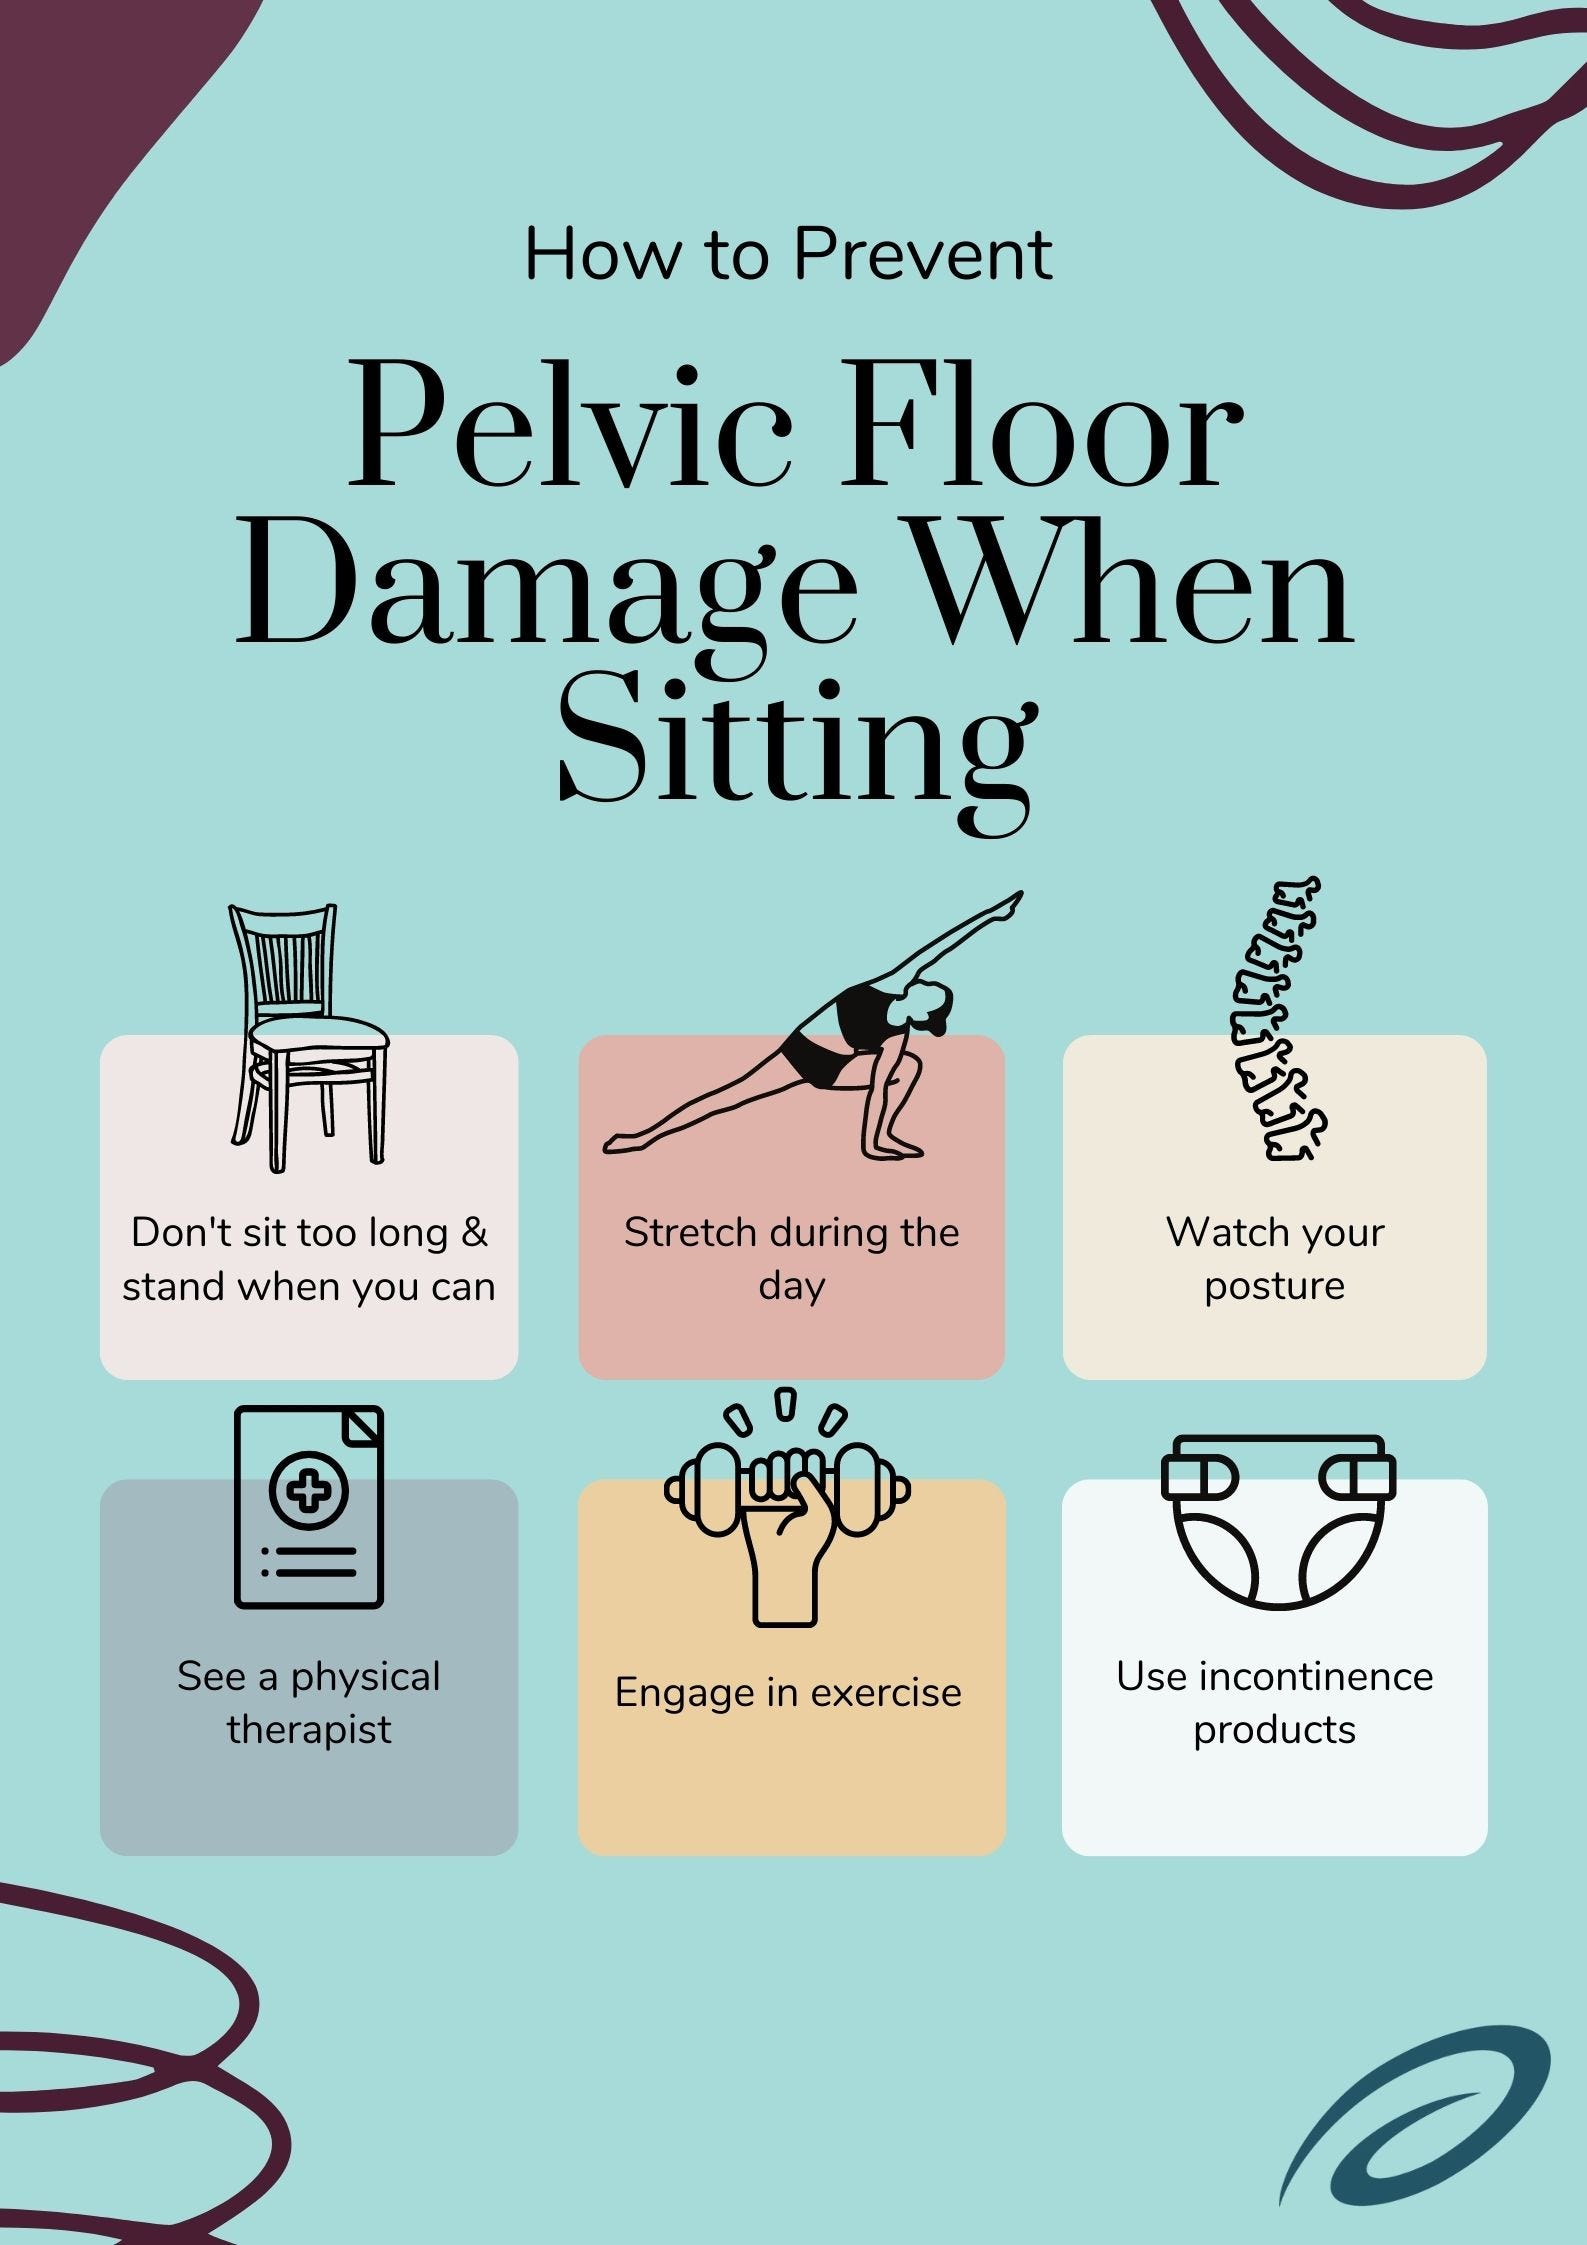 Preventing pelvic floor damage when sitting